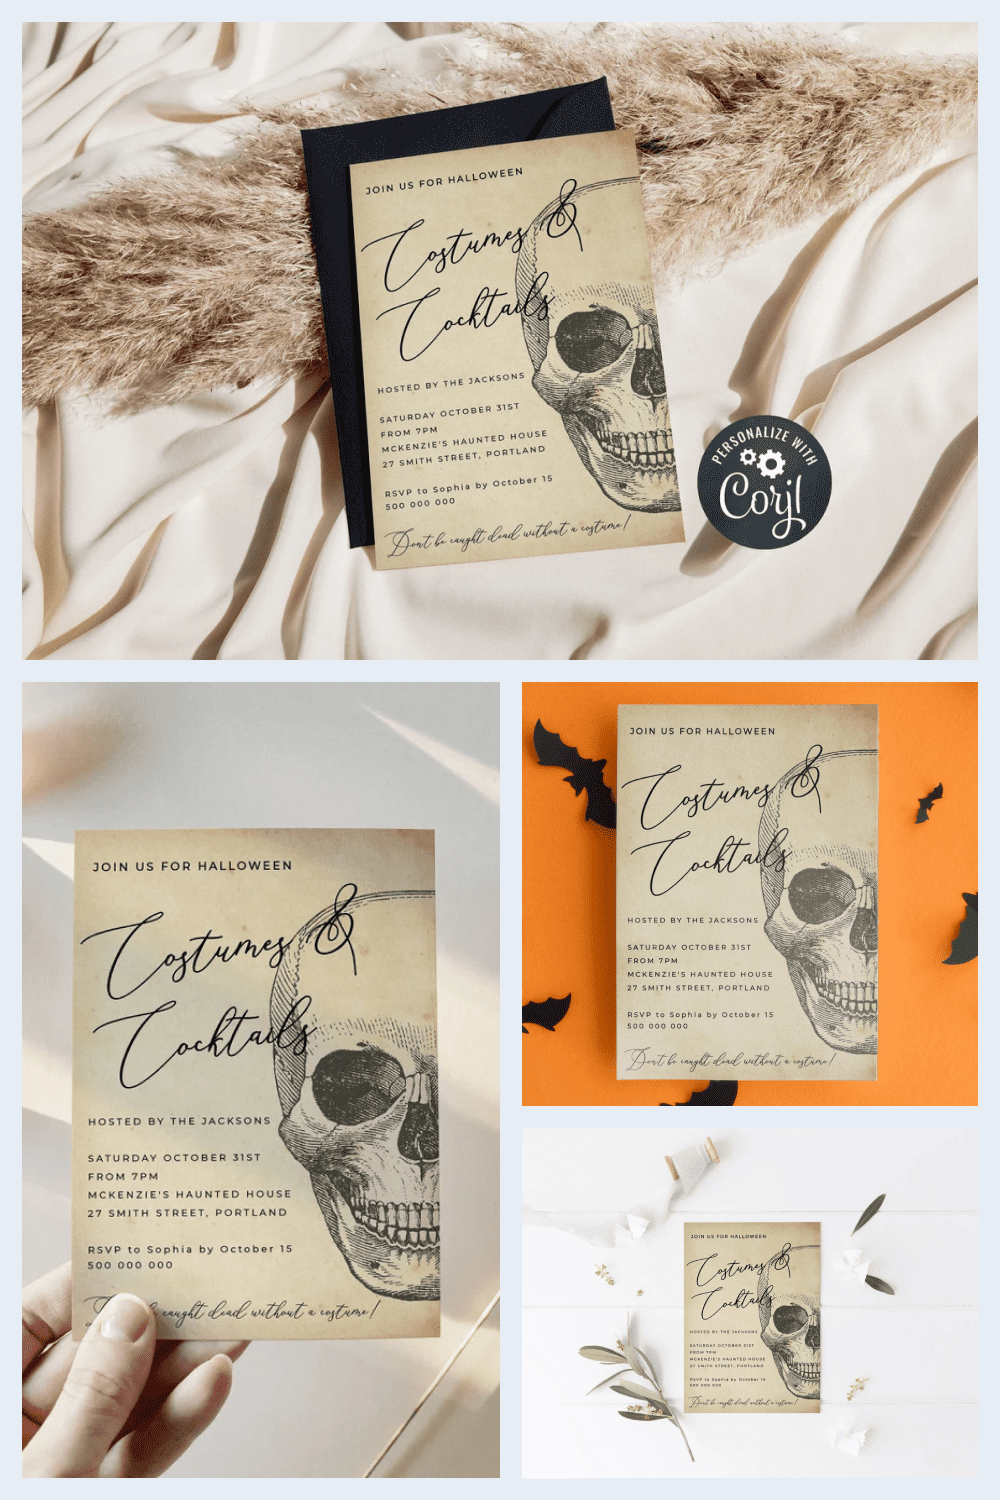 Stylish and beautiful vintage style Halloween invitation with skull.